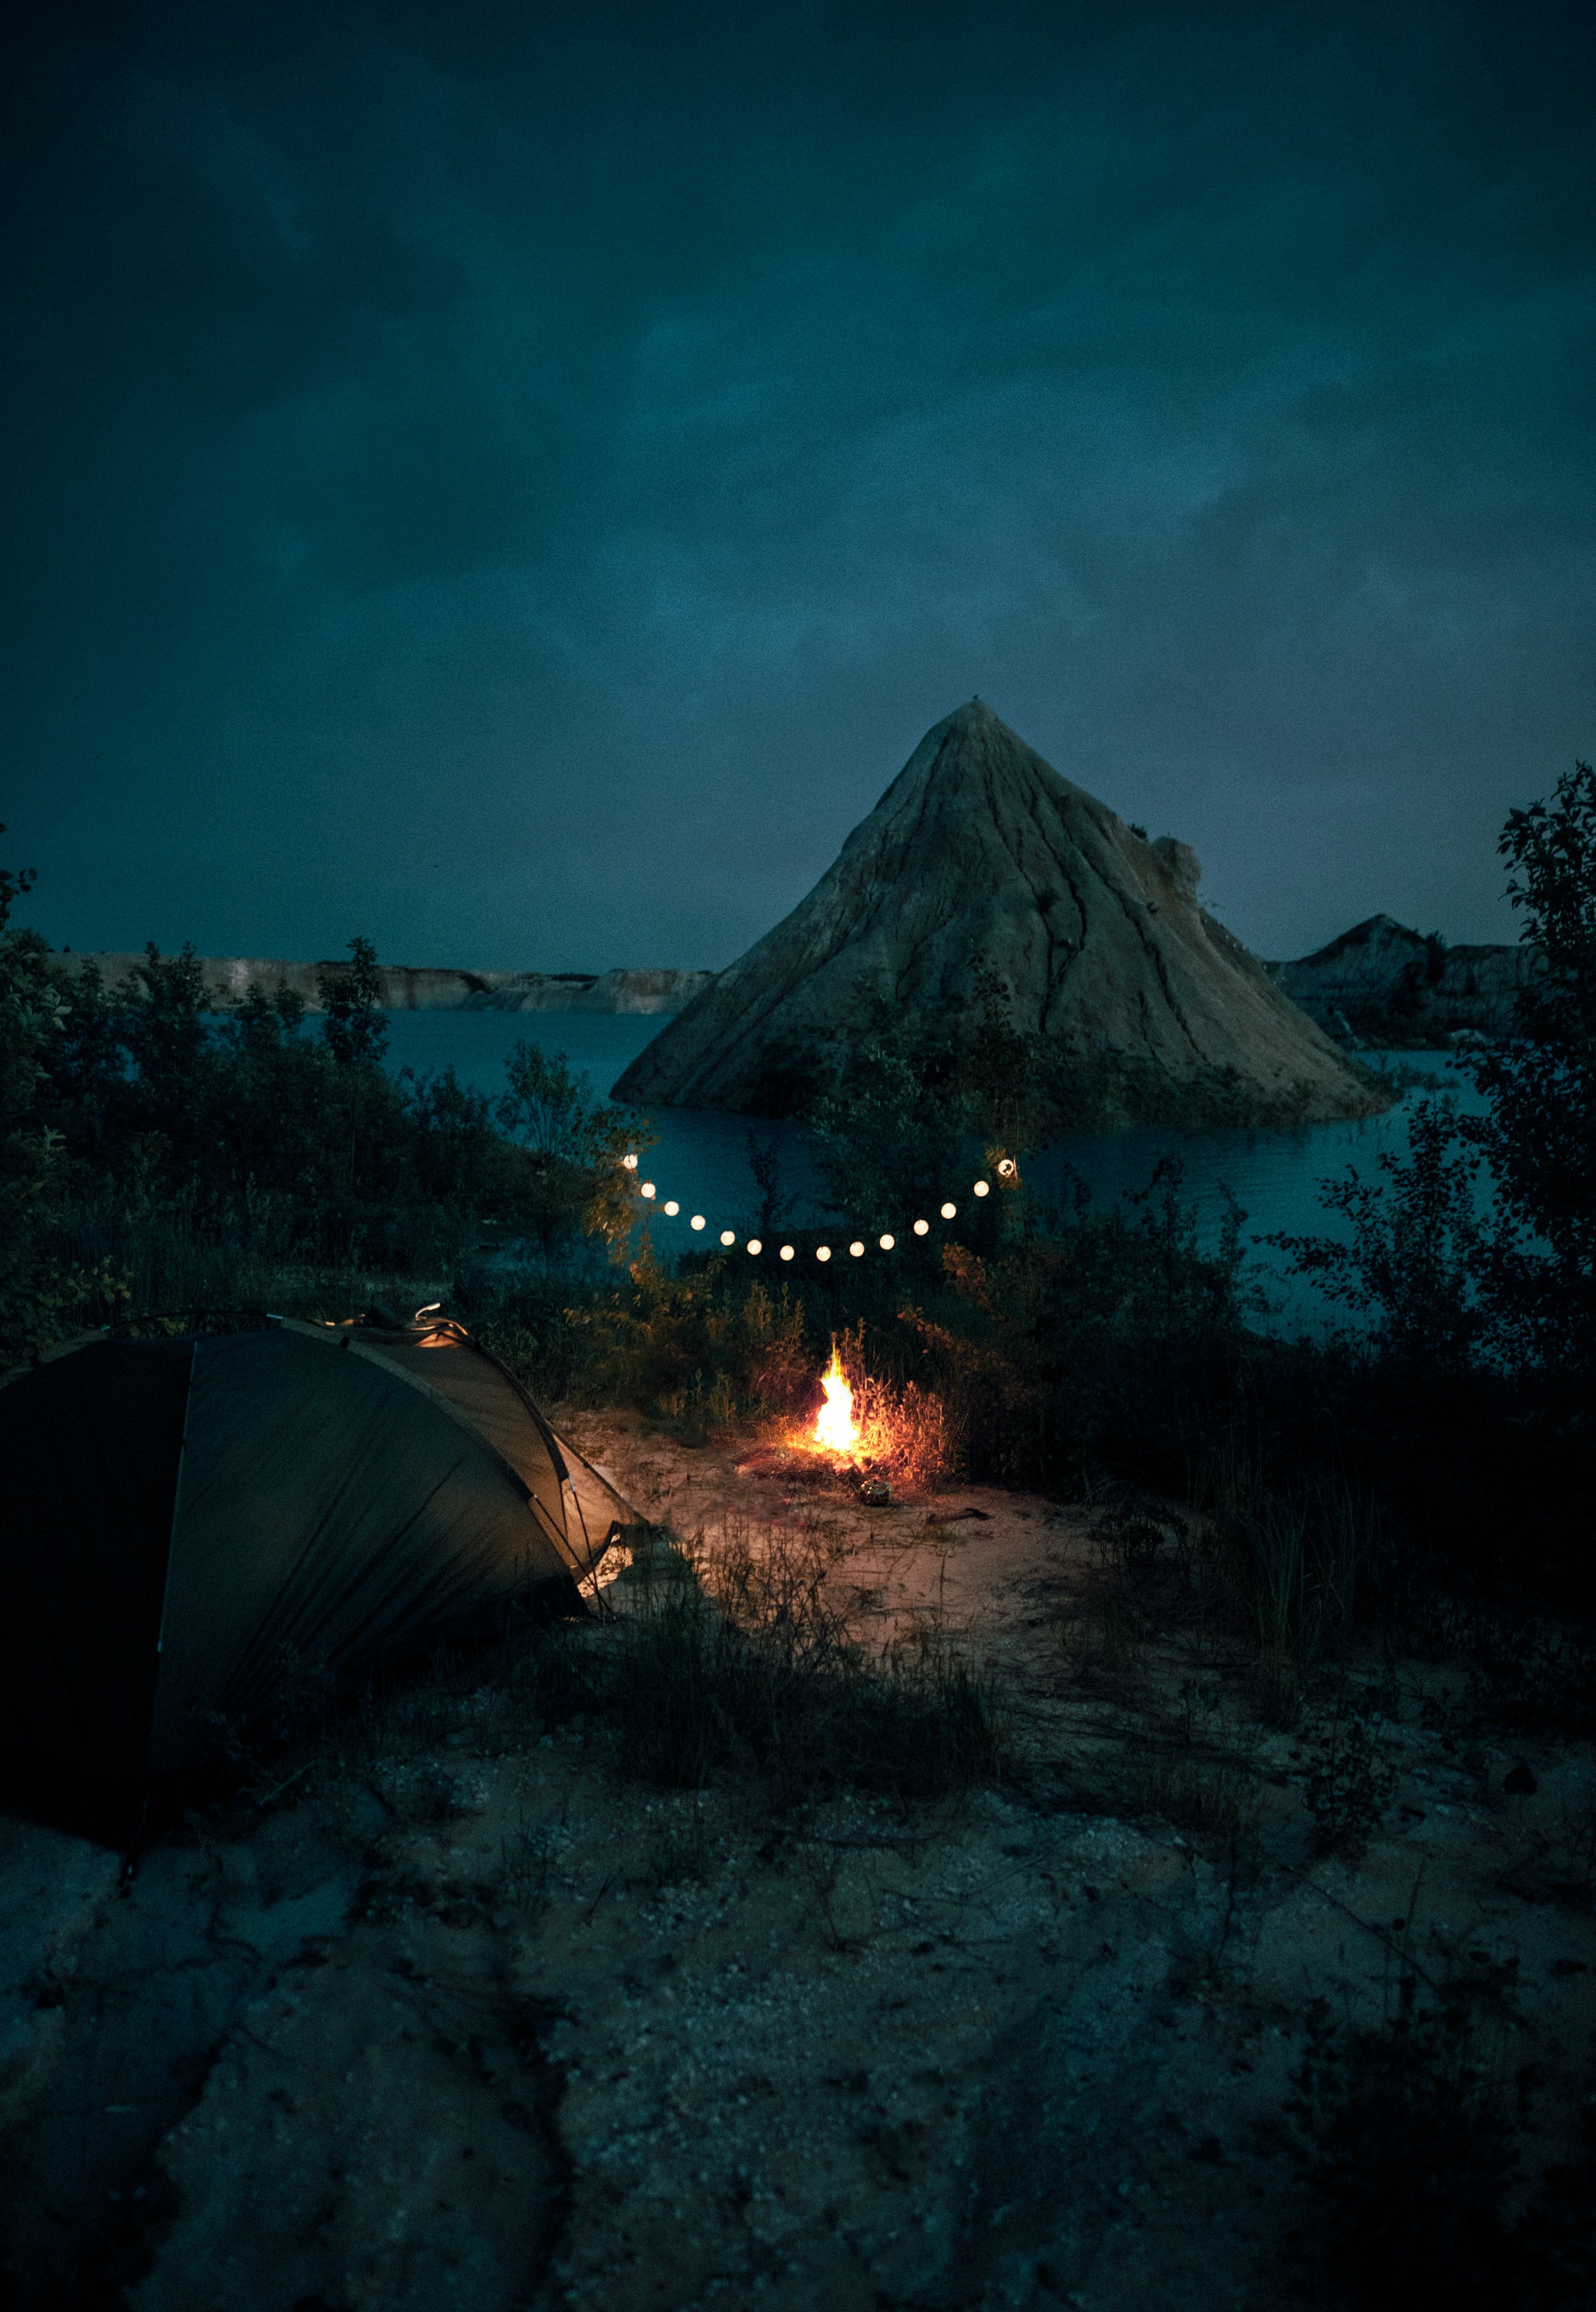 camping, campsite, bonfire, nature, rocks, garland, tent images